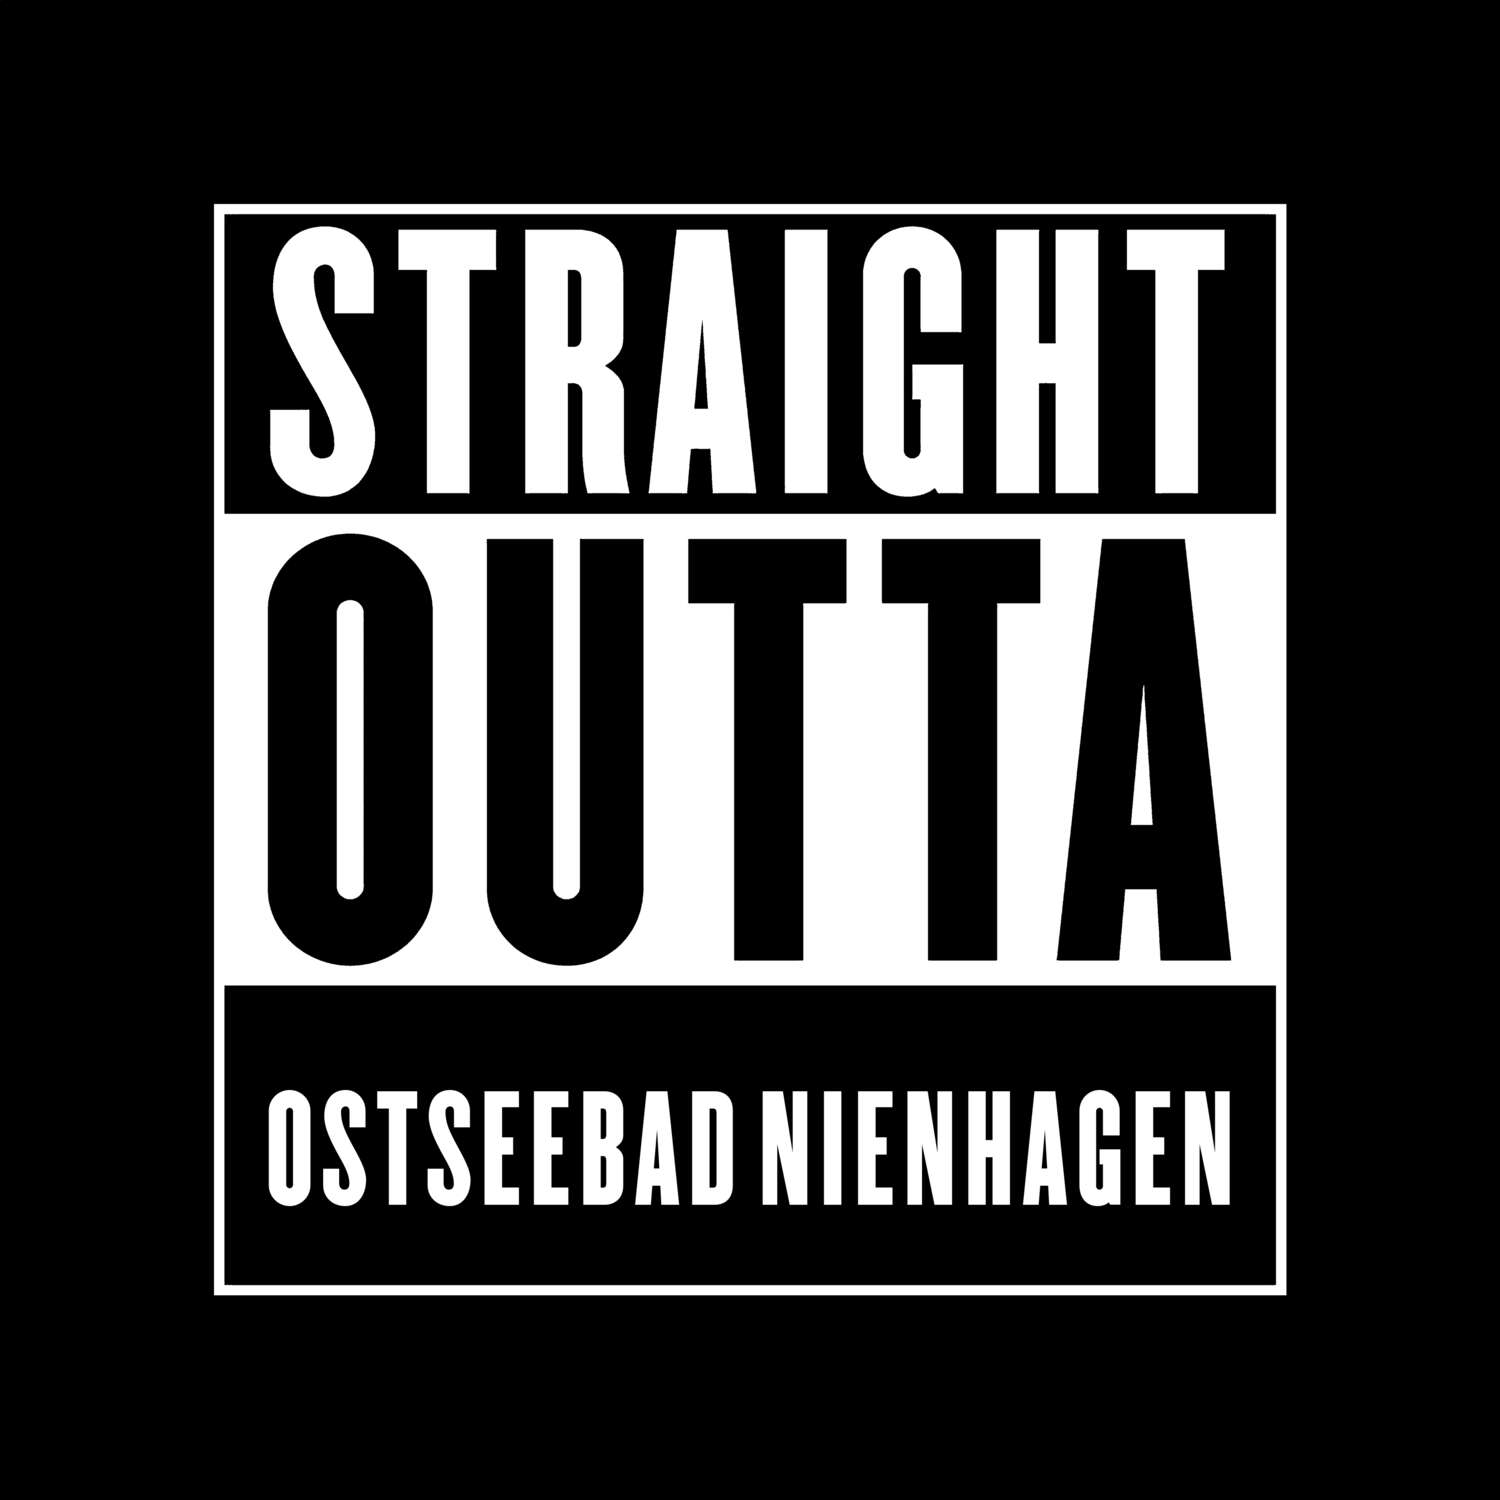 Ostseebad Nienhagen T-Shirt »Straight Outta«